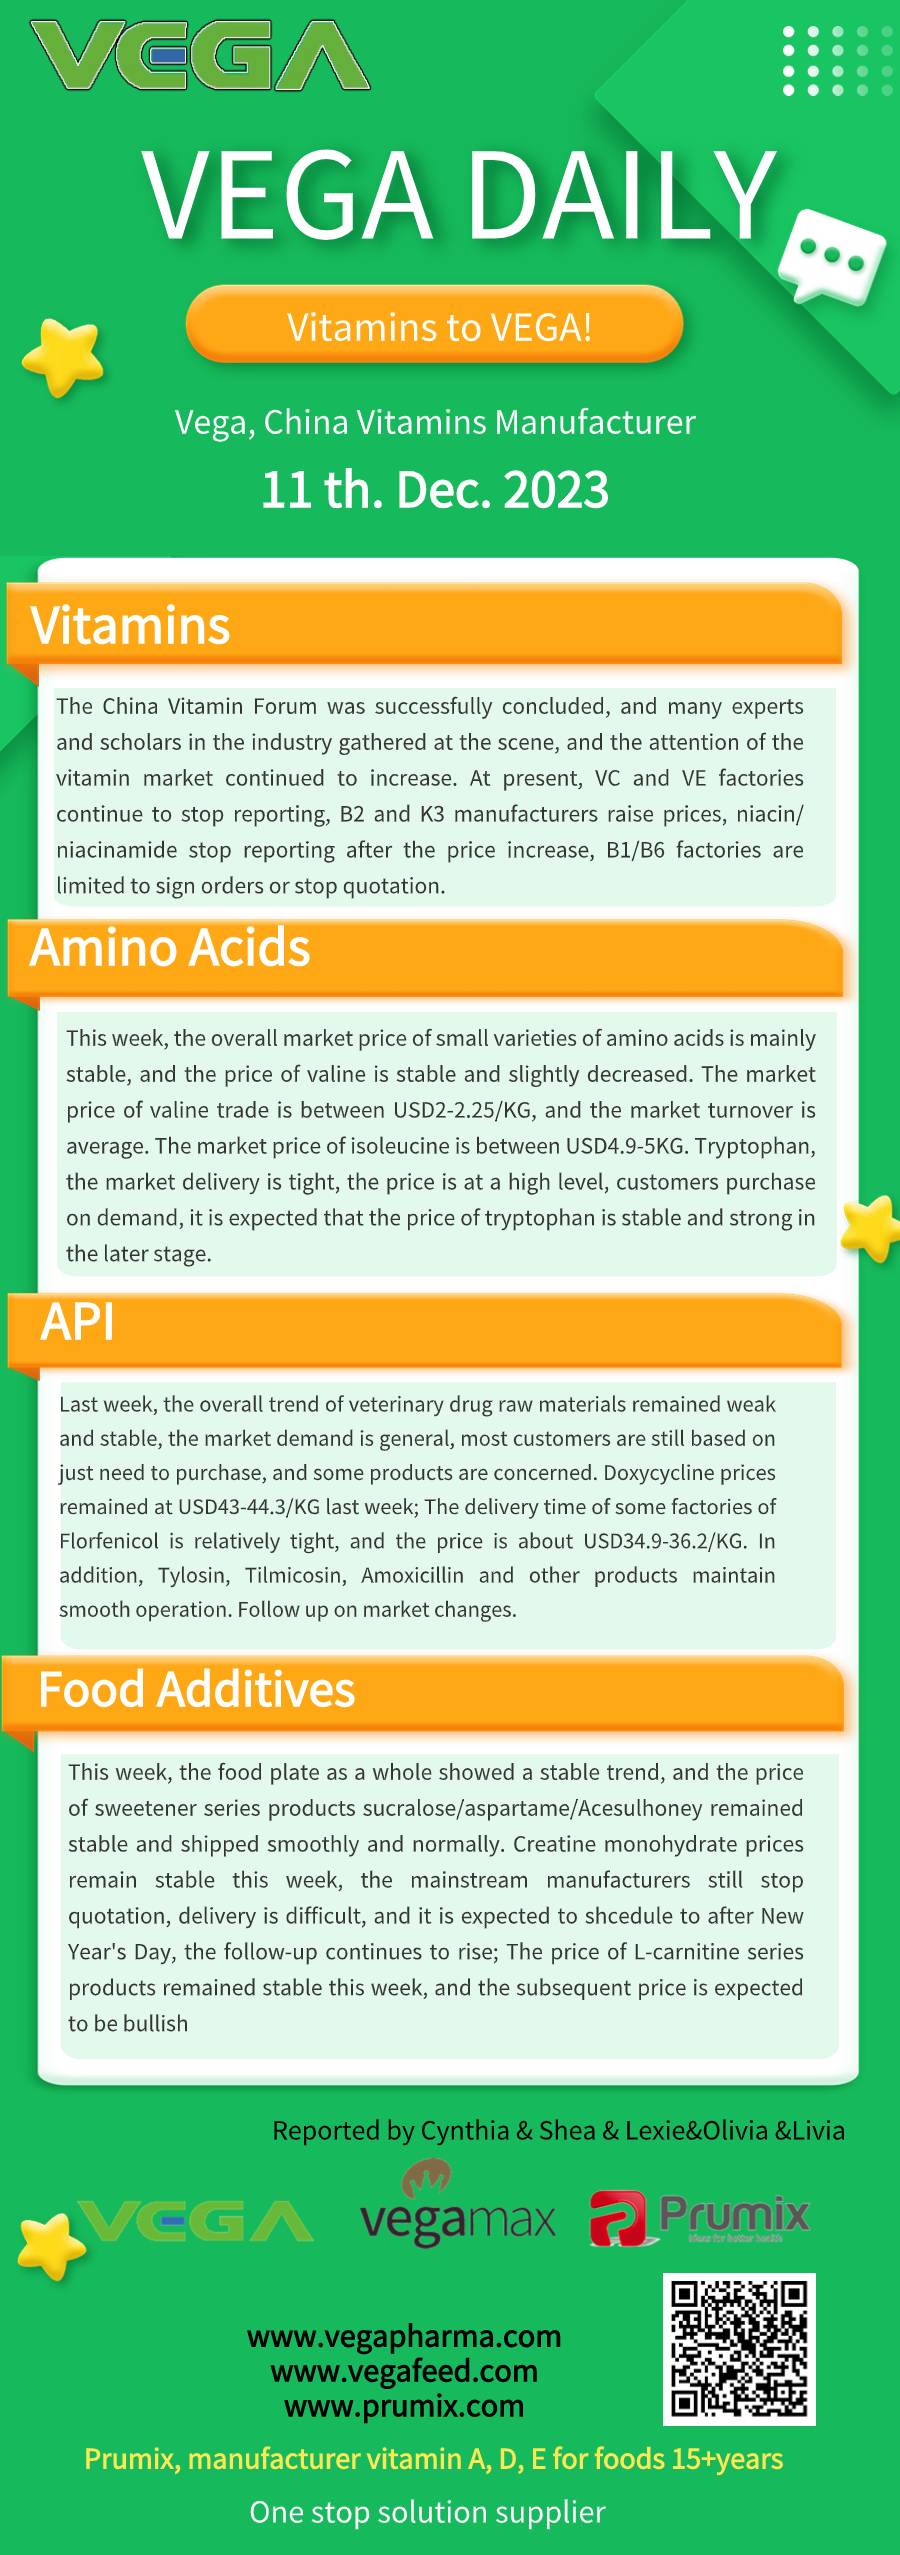 Vega Daily Dated on Dec 11th 2023 Vitamin Amino Acid APl Food Additives.jpg